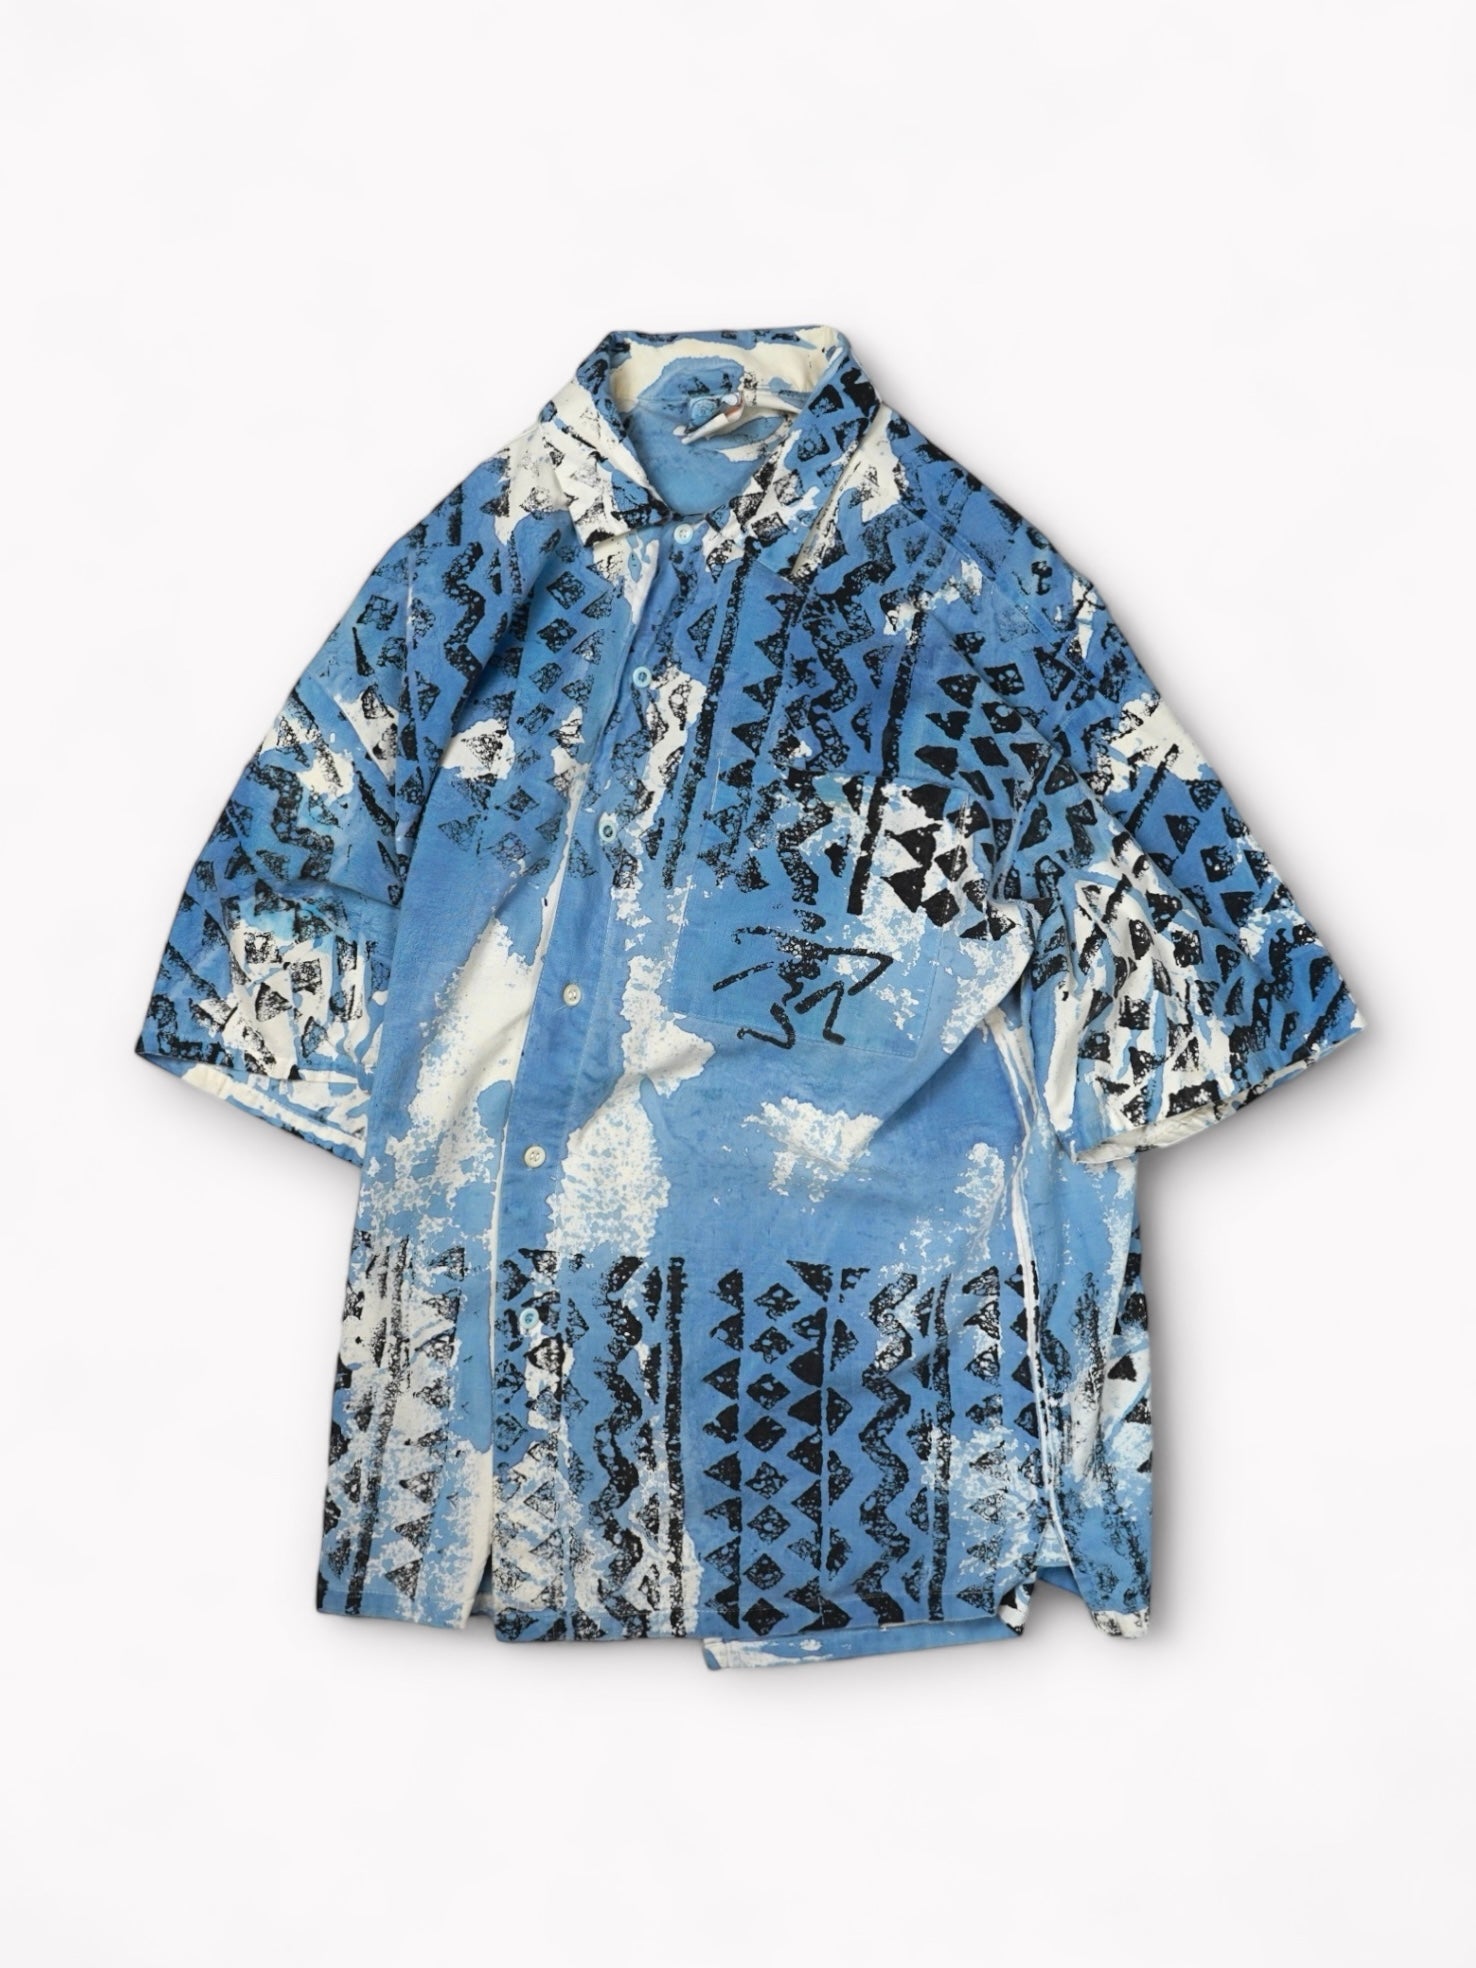 90's Ocean Pacific Cotton all over print shirt made in USA [XL] Ocean Pacific cotton short sleeve shirt